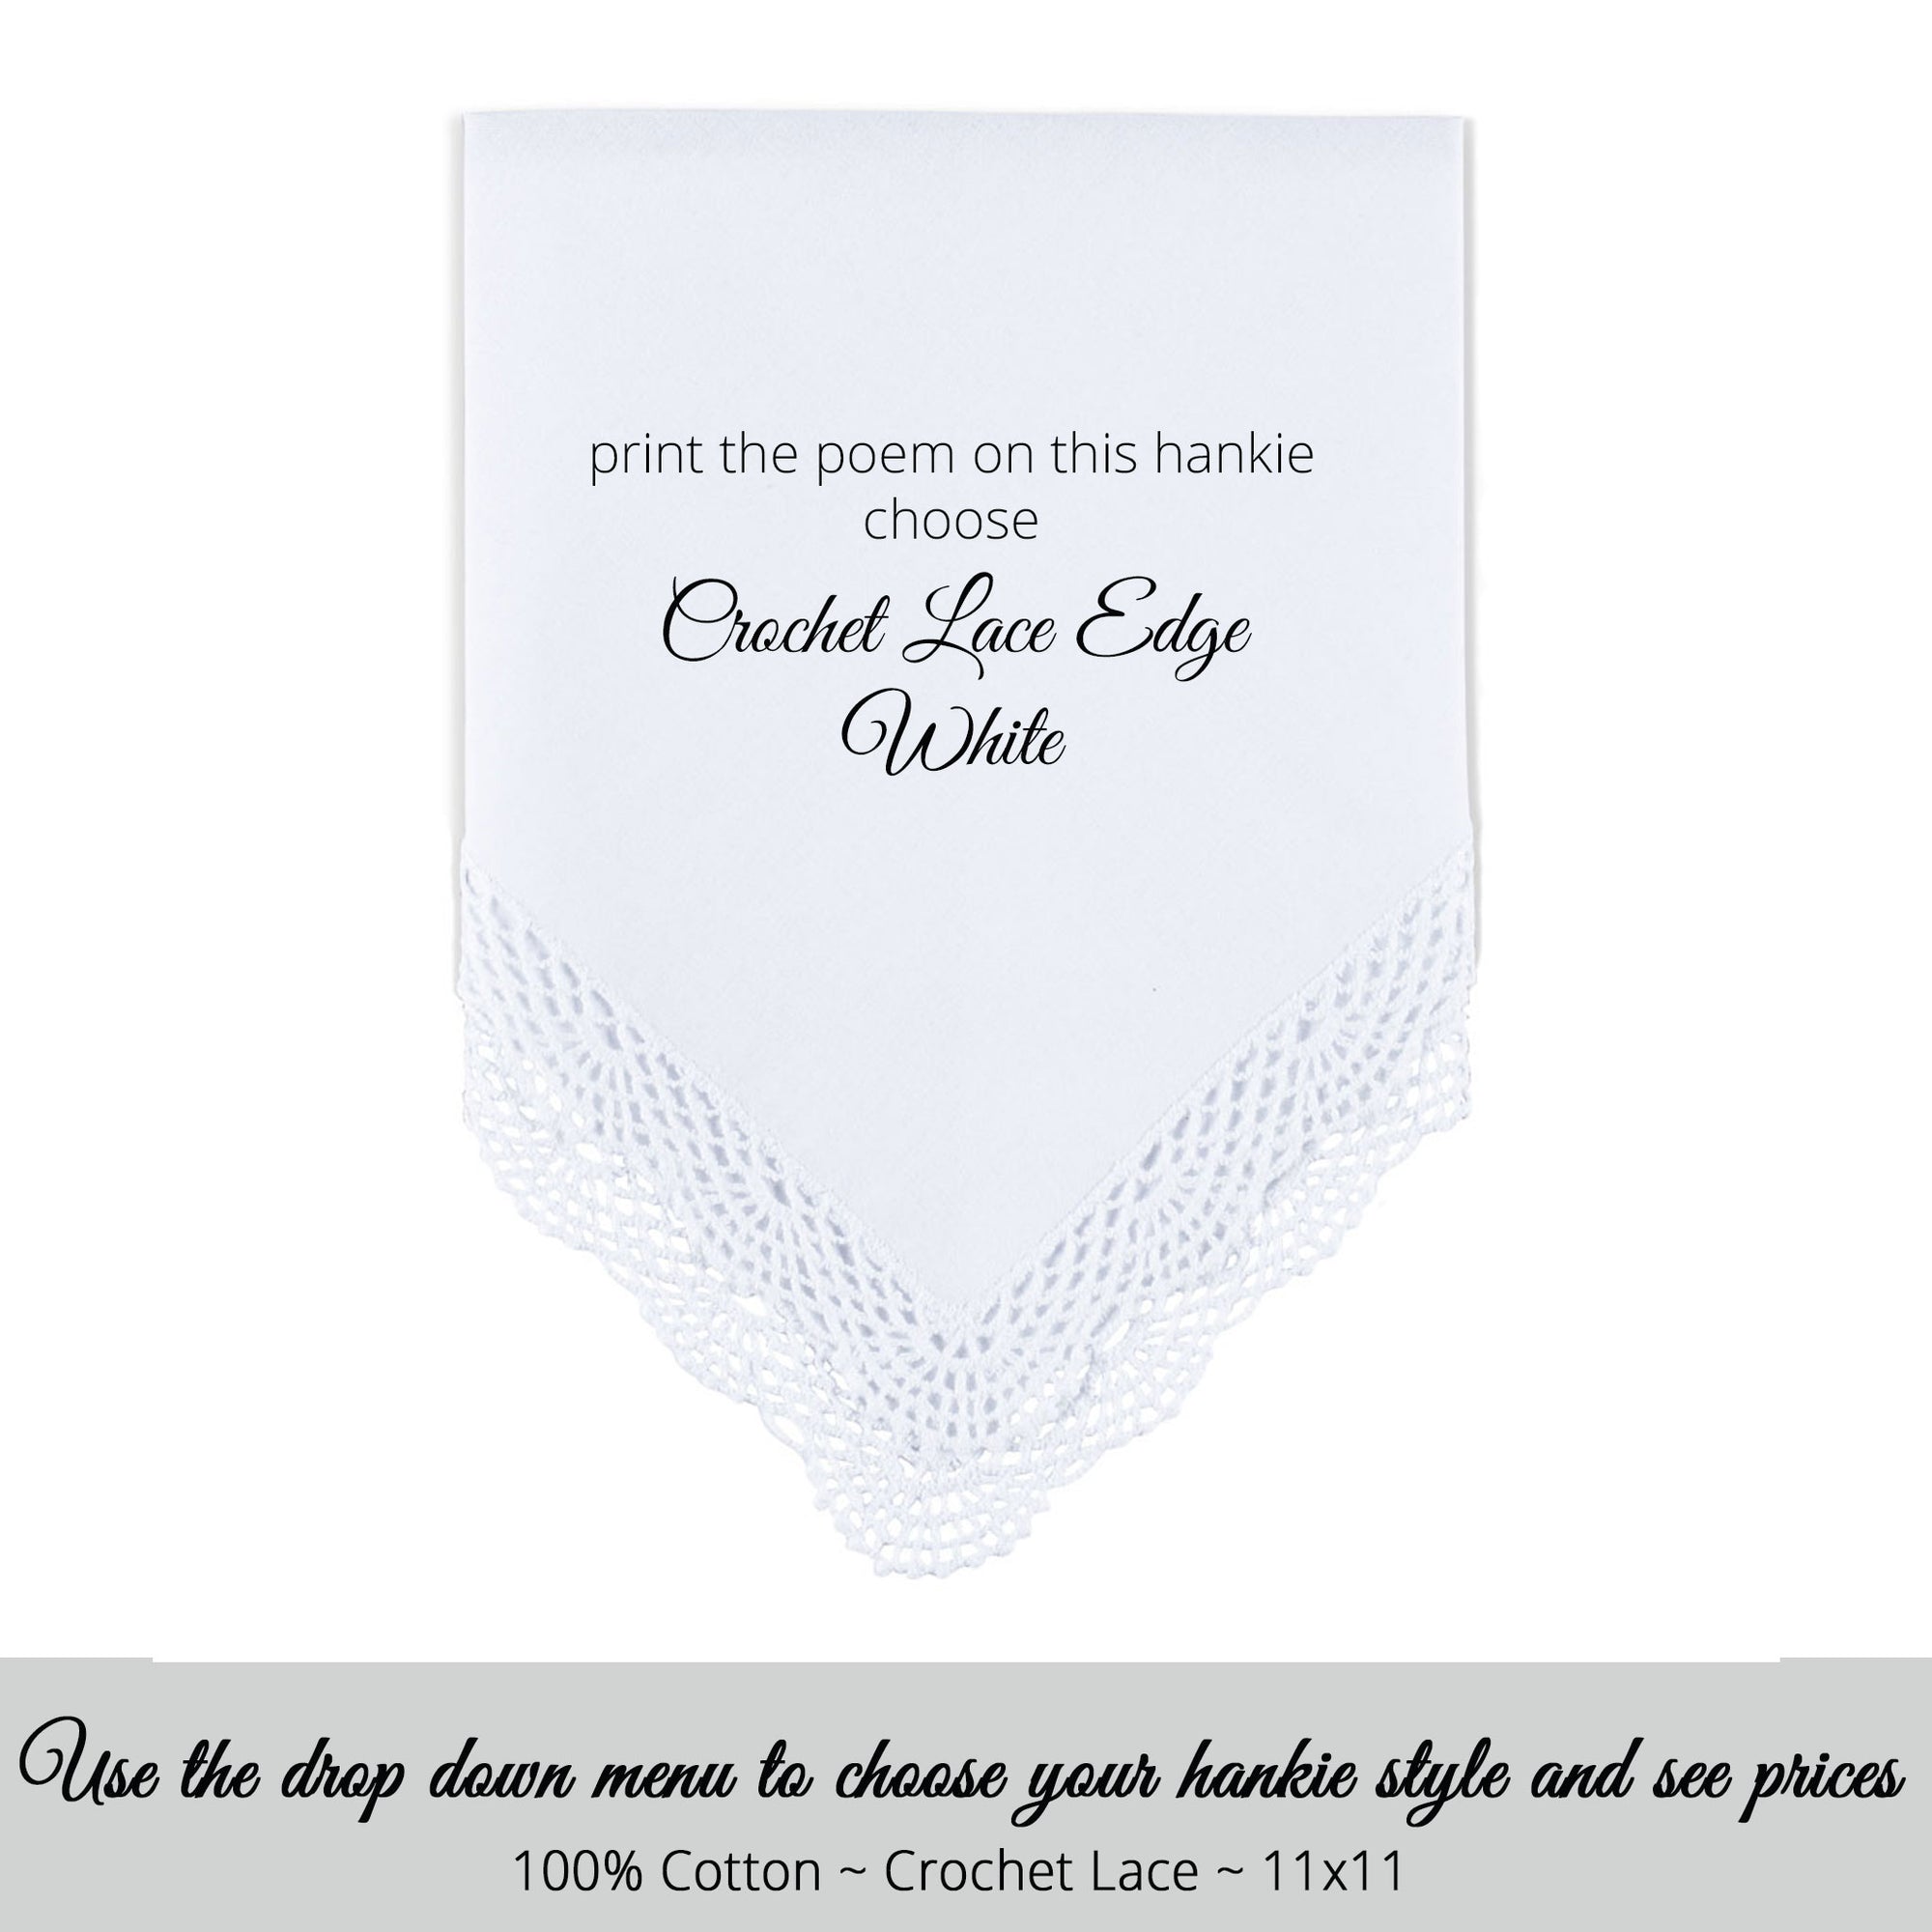 Wedding handkerchief white with crochet lace edge 